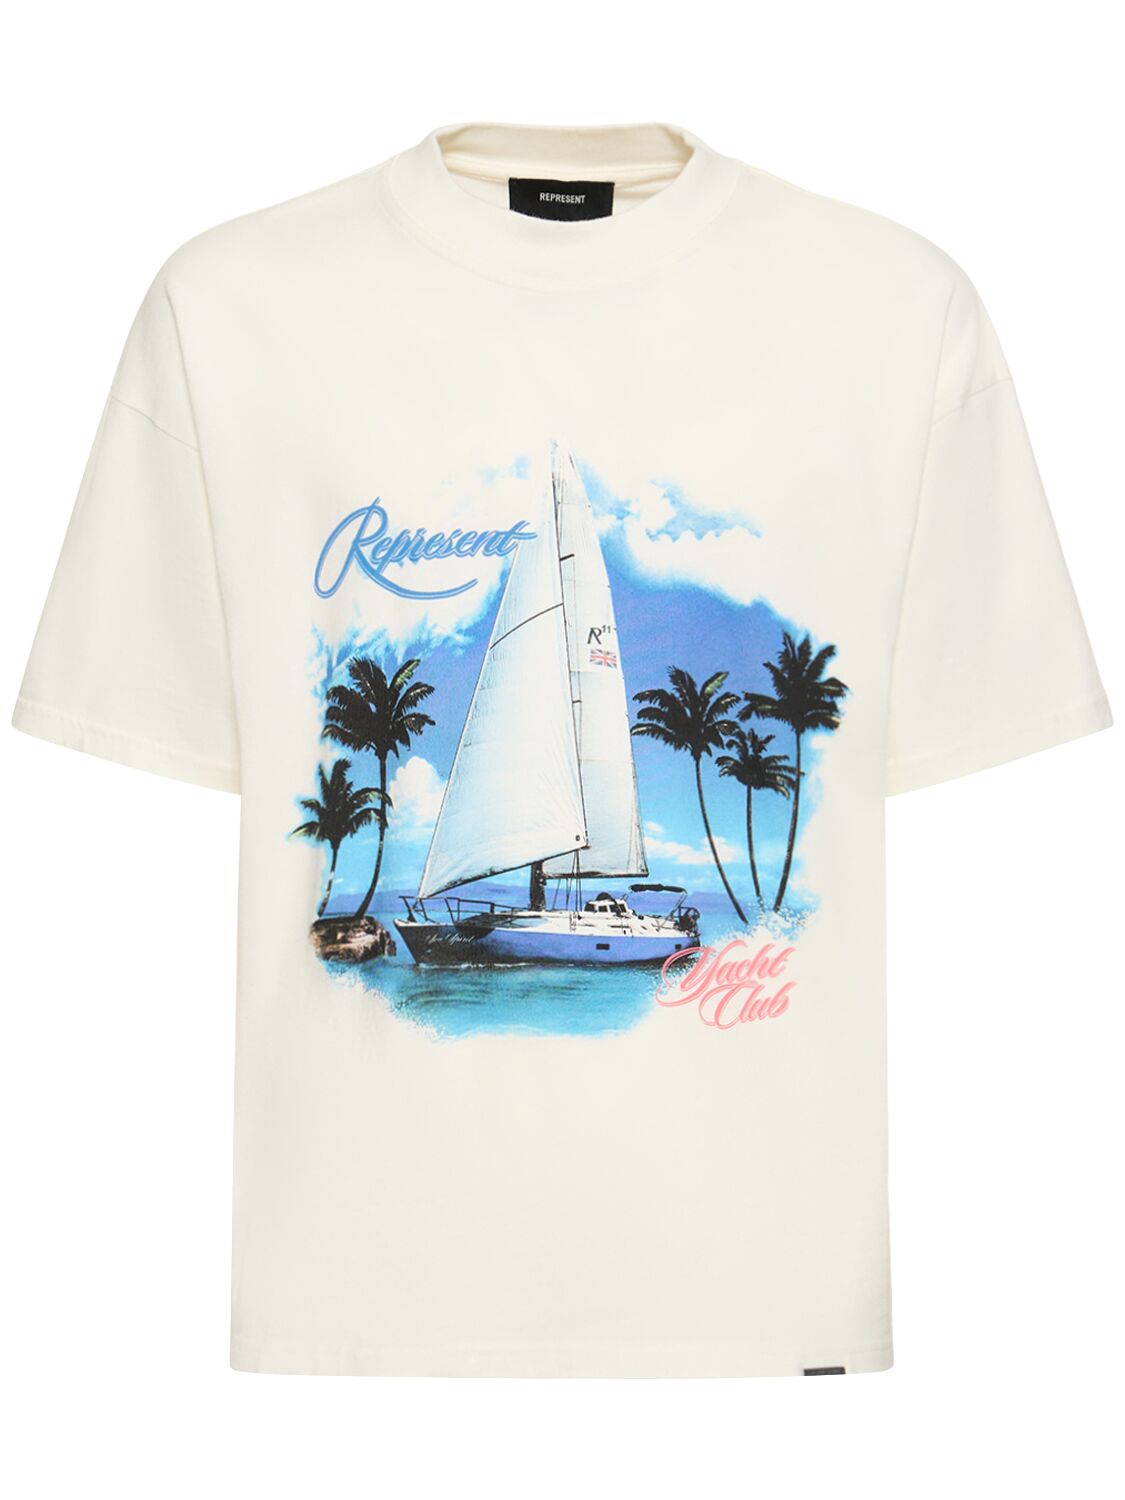 Represent Yacht Club T-shirt In Flat White